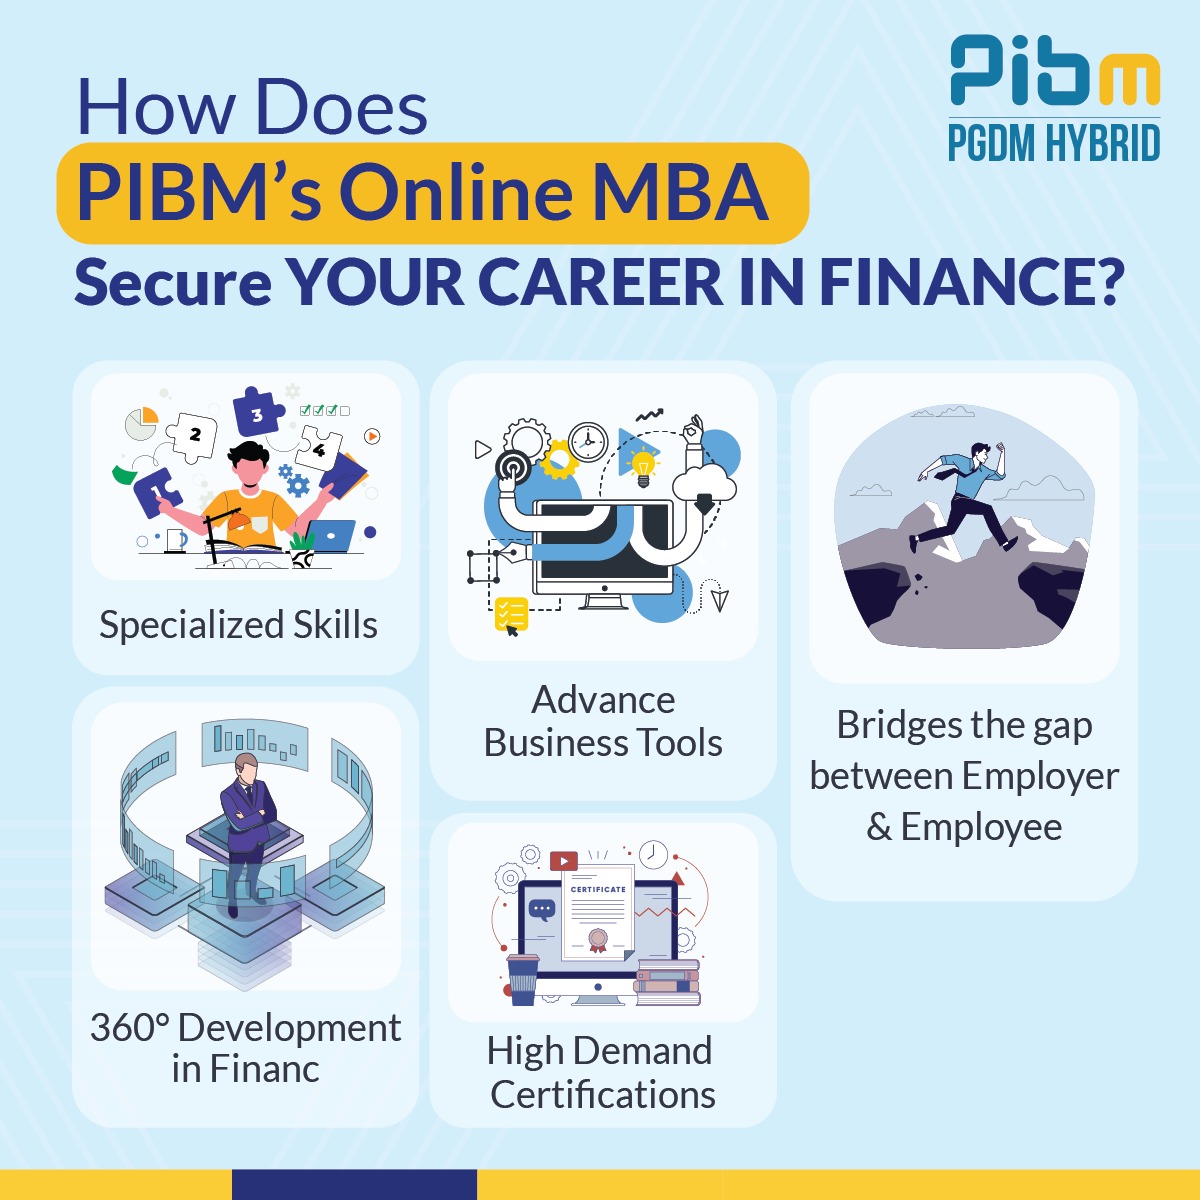 Secure Your Career in Finance with PIBM’s PGDM Hybrid Program! 🎓💼

tinyurl.com/5xwm3w8n

#pgdmhybrid #pibmhybrid #pibmpune #onlinemba #mba #pgdm #bschool #commerce #bcom #mcom #finance #financecareer